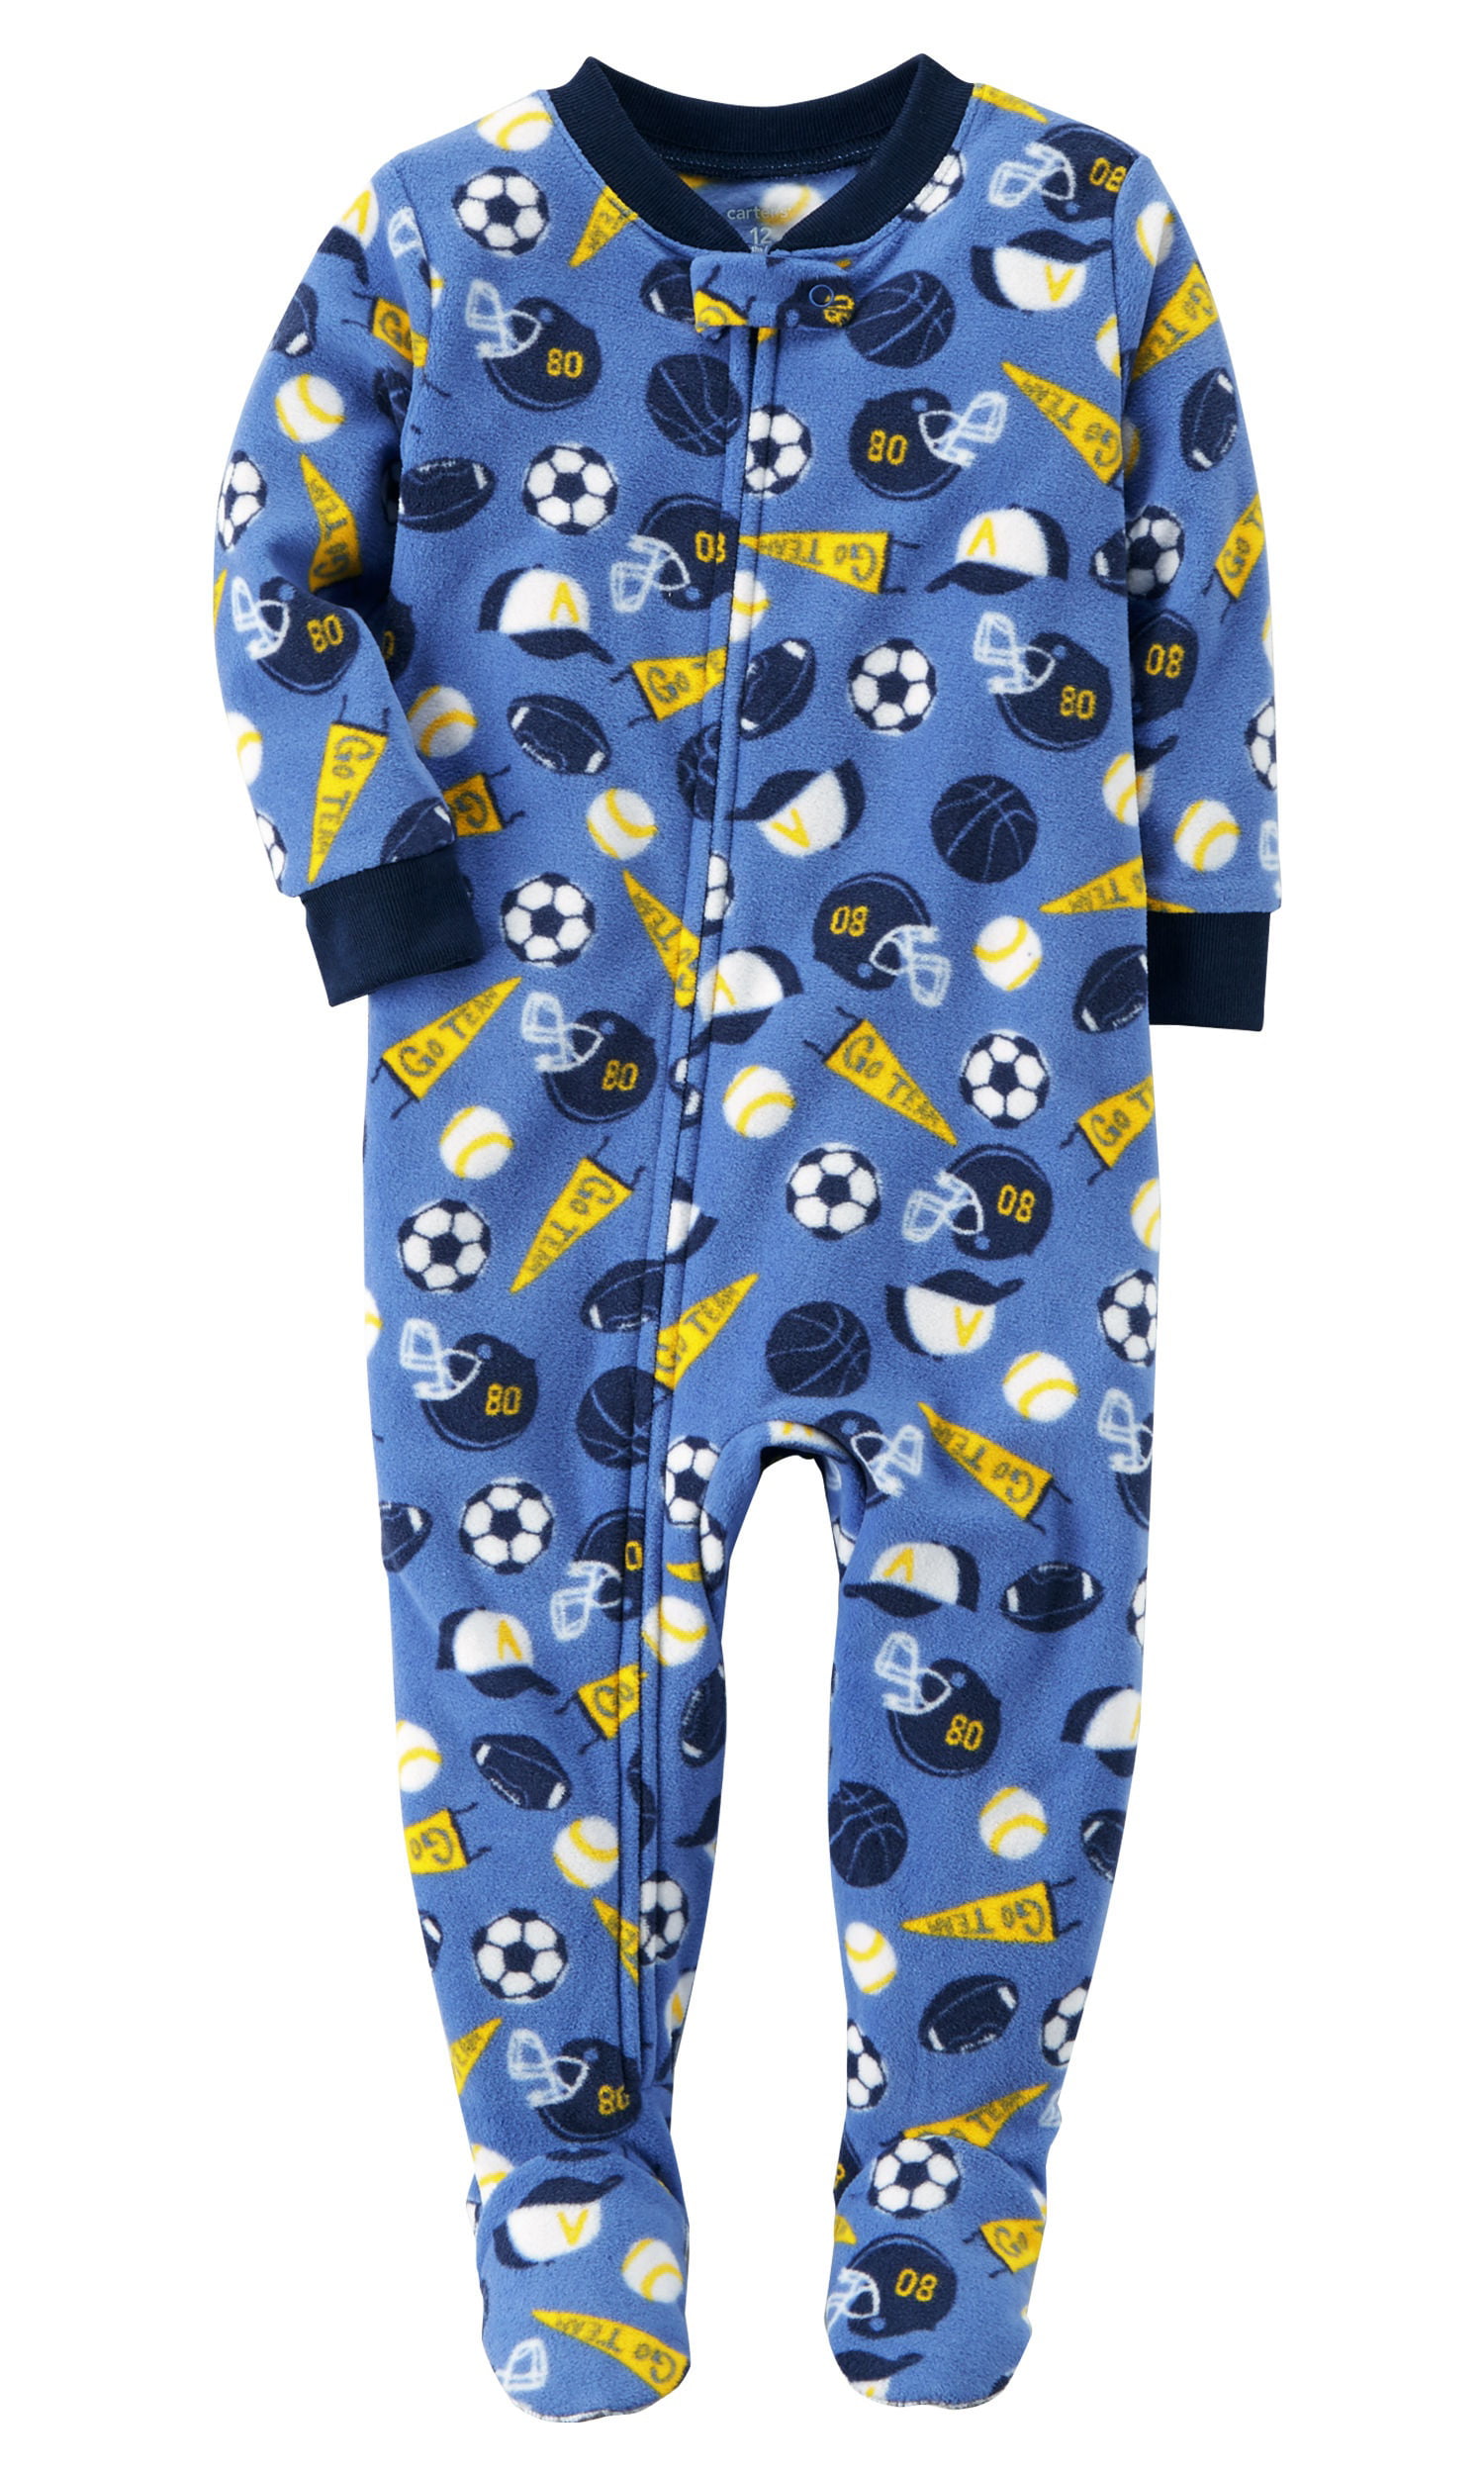 Carter's Carter's Baby Boys' 1 Piece Sports Fleece Pajamas, 18 Months